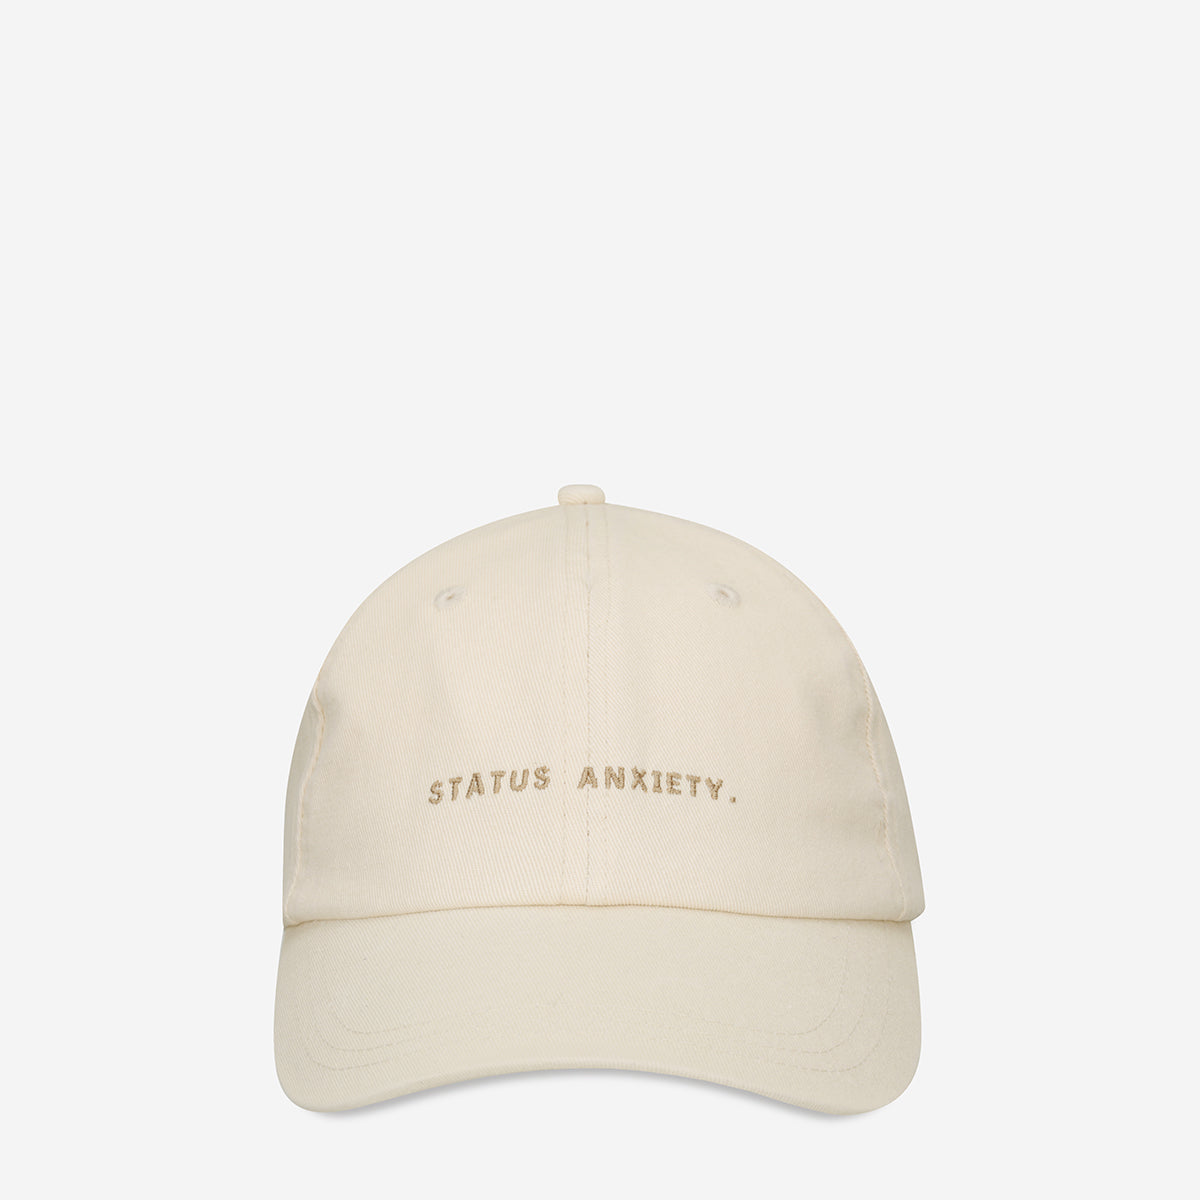 Status Anxiety Under The Sun Hat - Cream